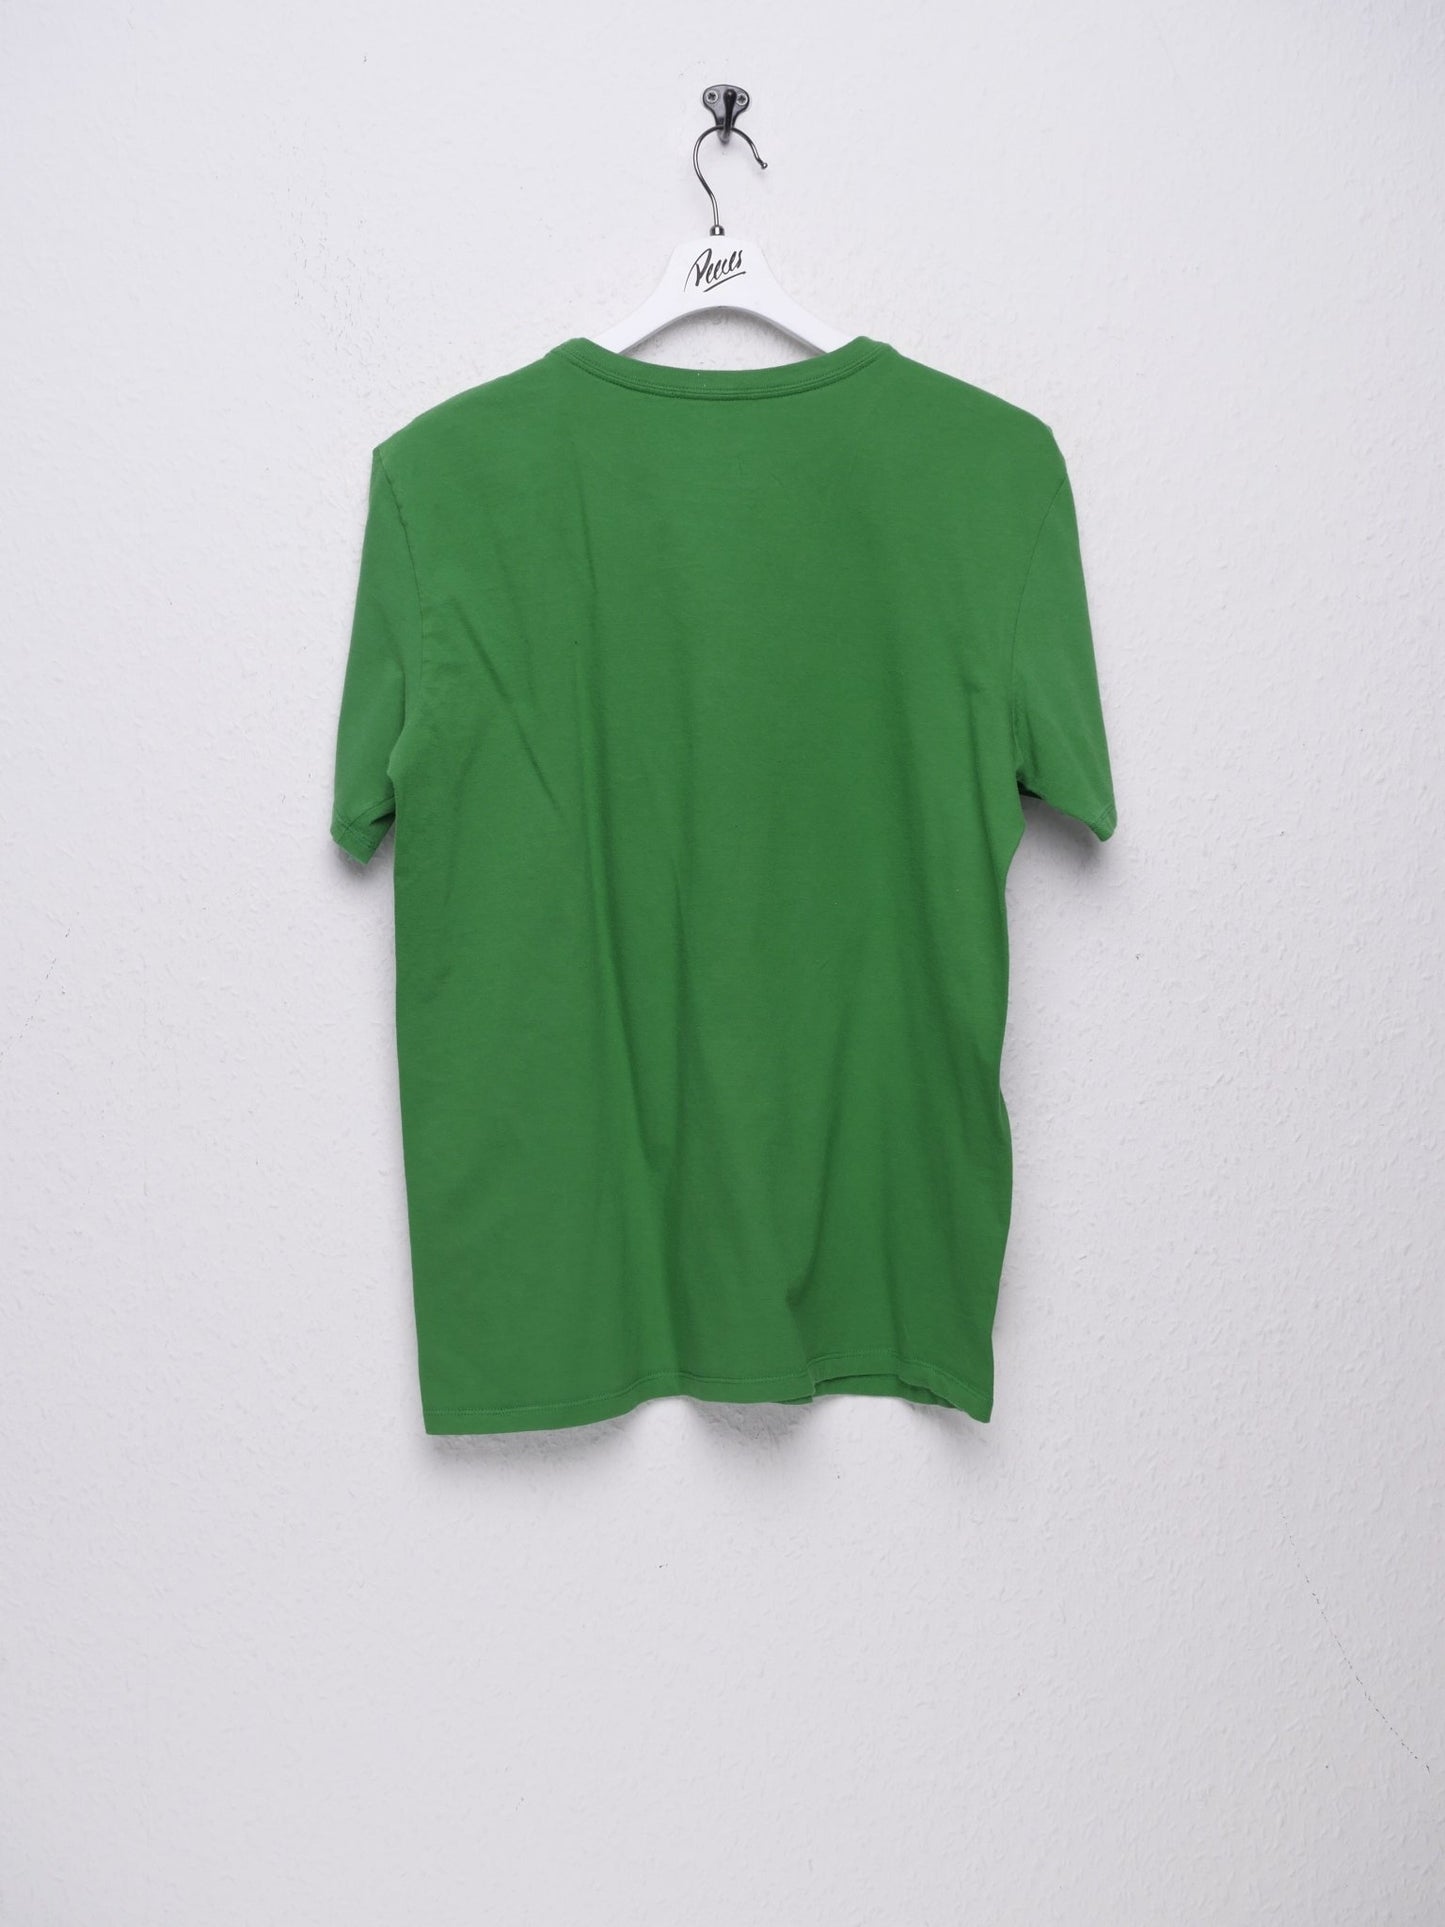 Nike printed green Final Four Shirt - Peeces